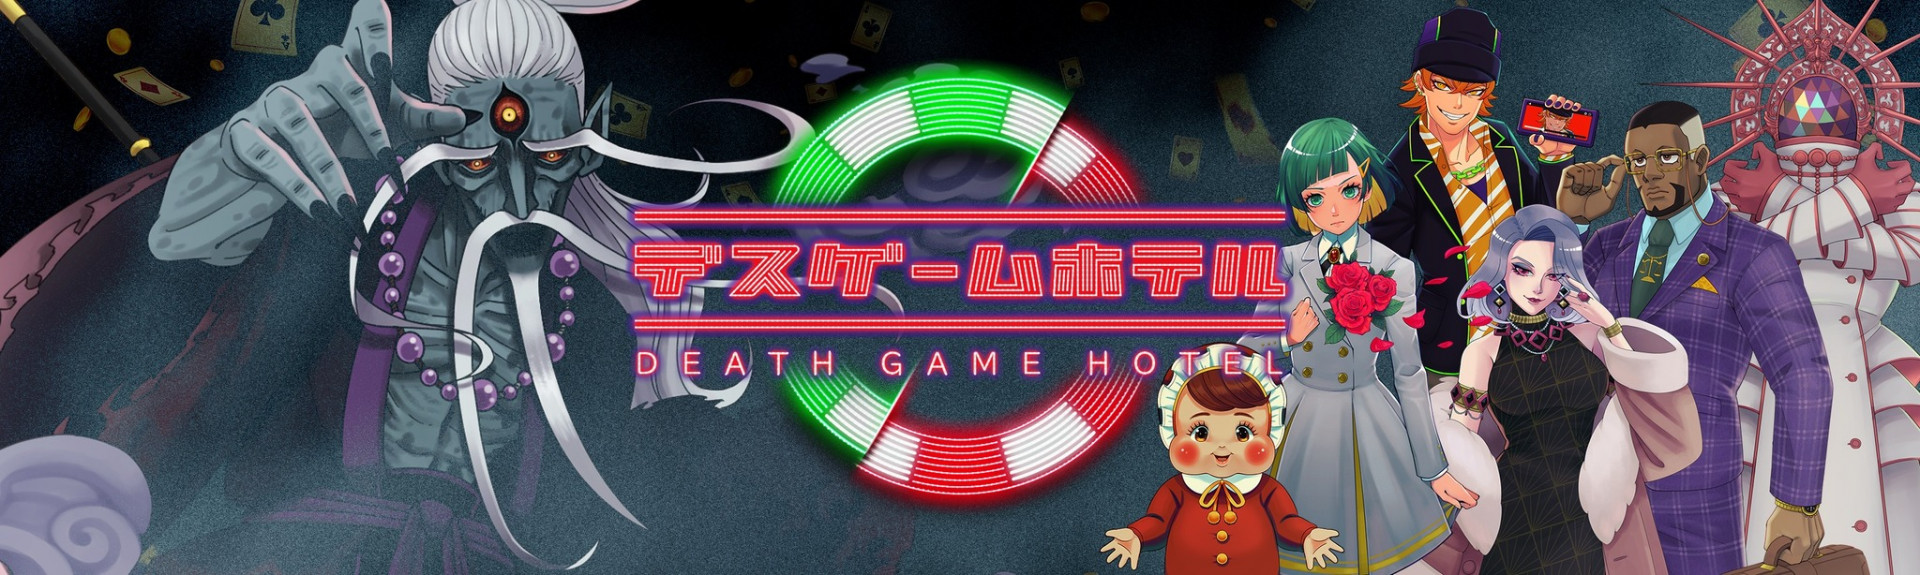 Death Game Hotel